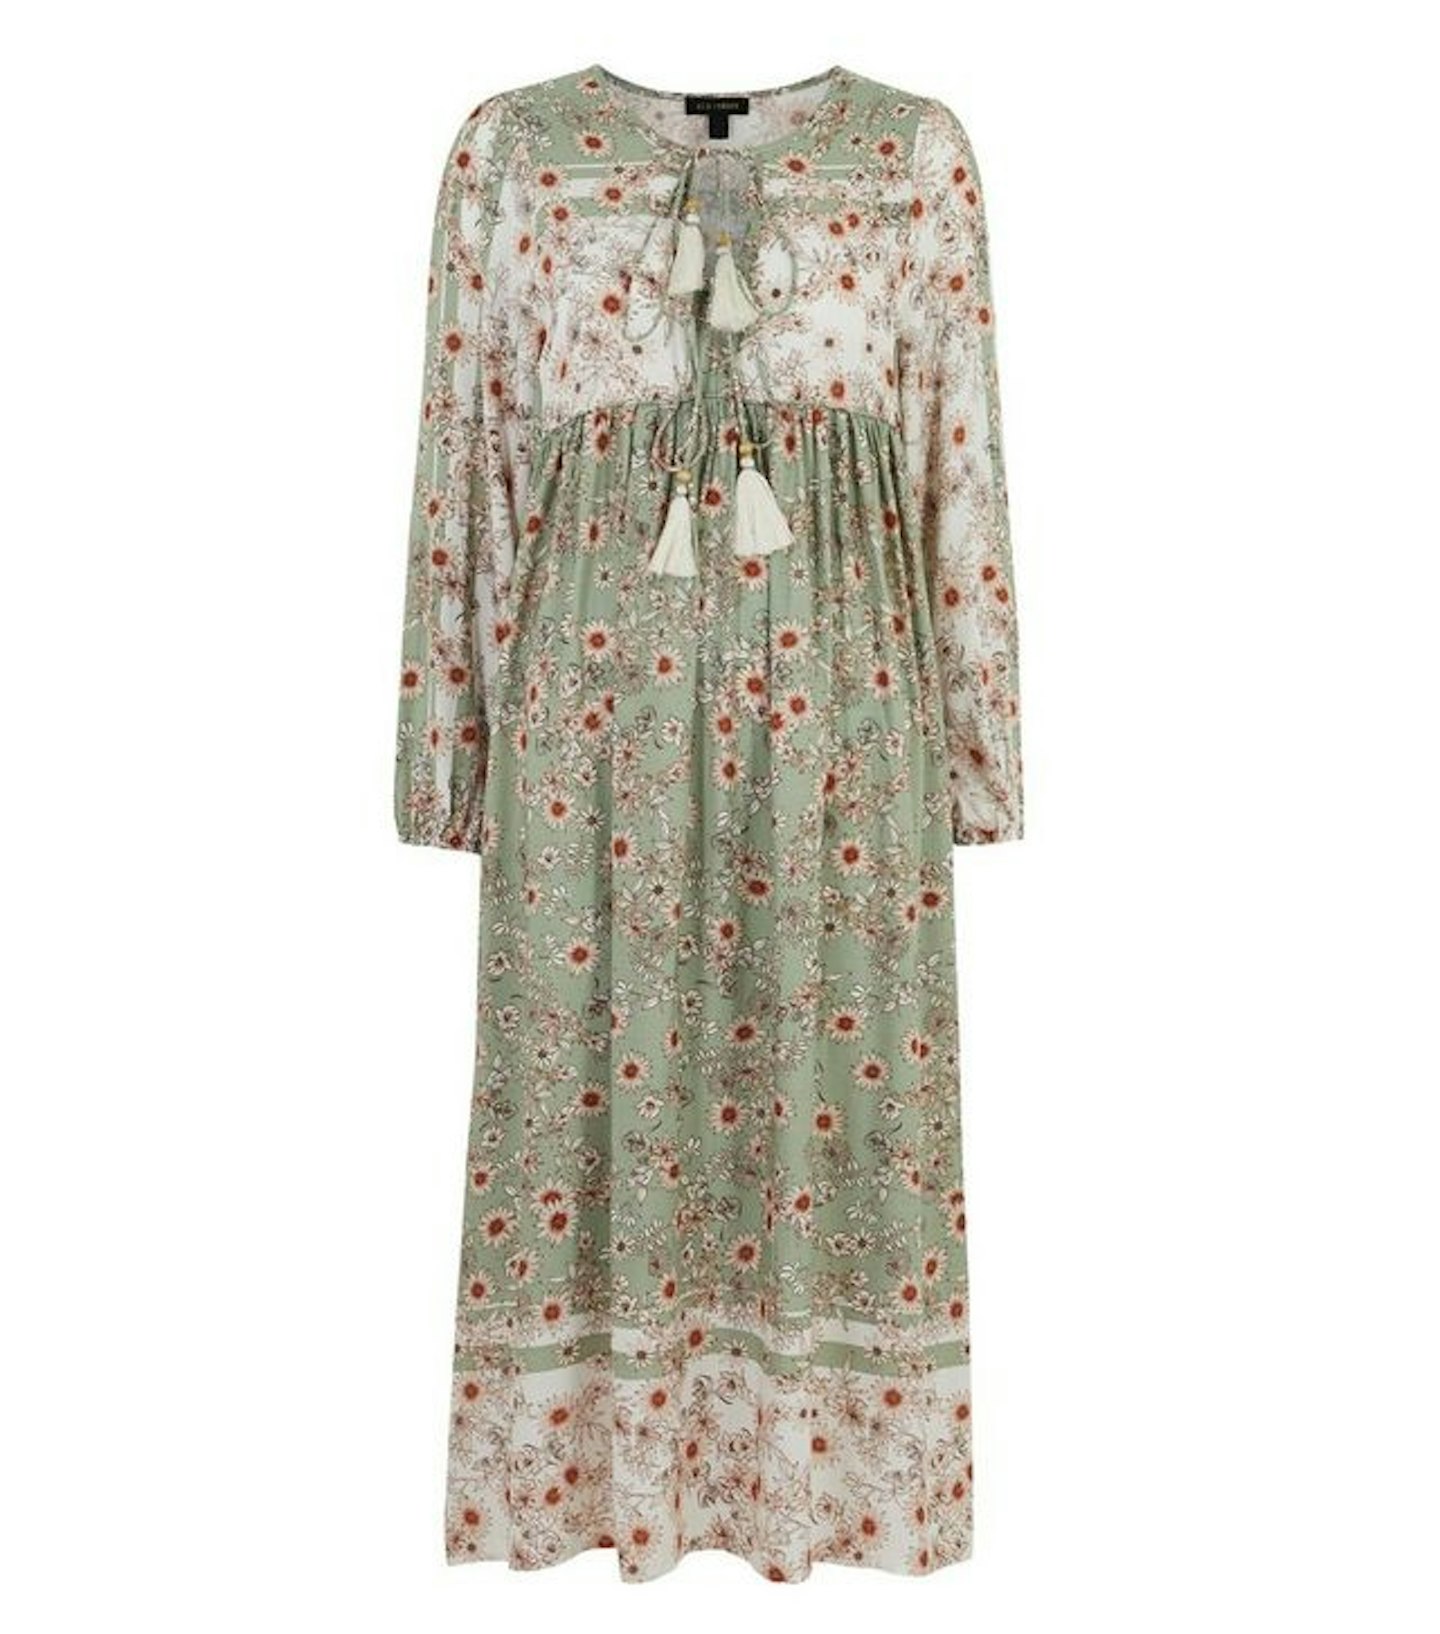 New Look, Mint Green Floral Tie Neck Maxi Dress, £29.99